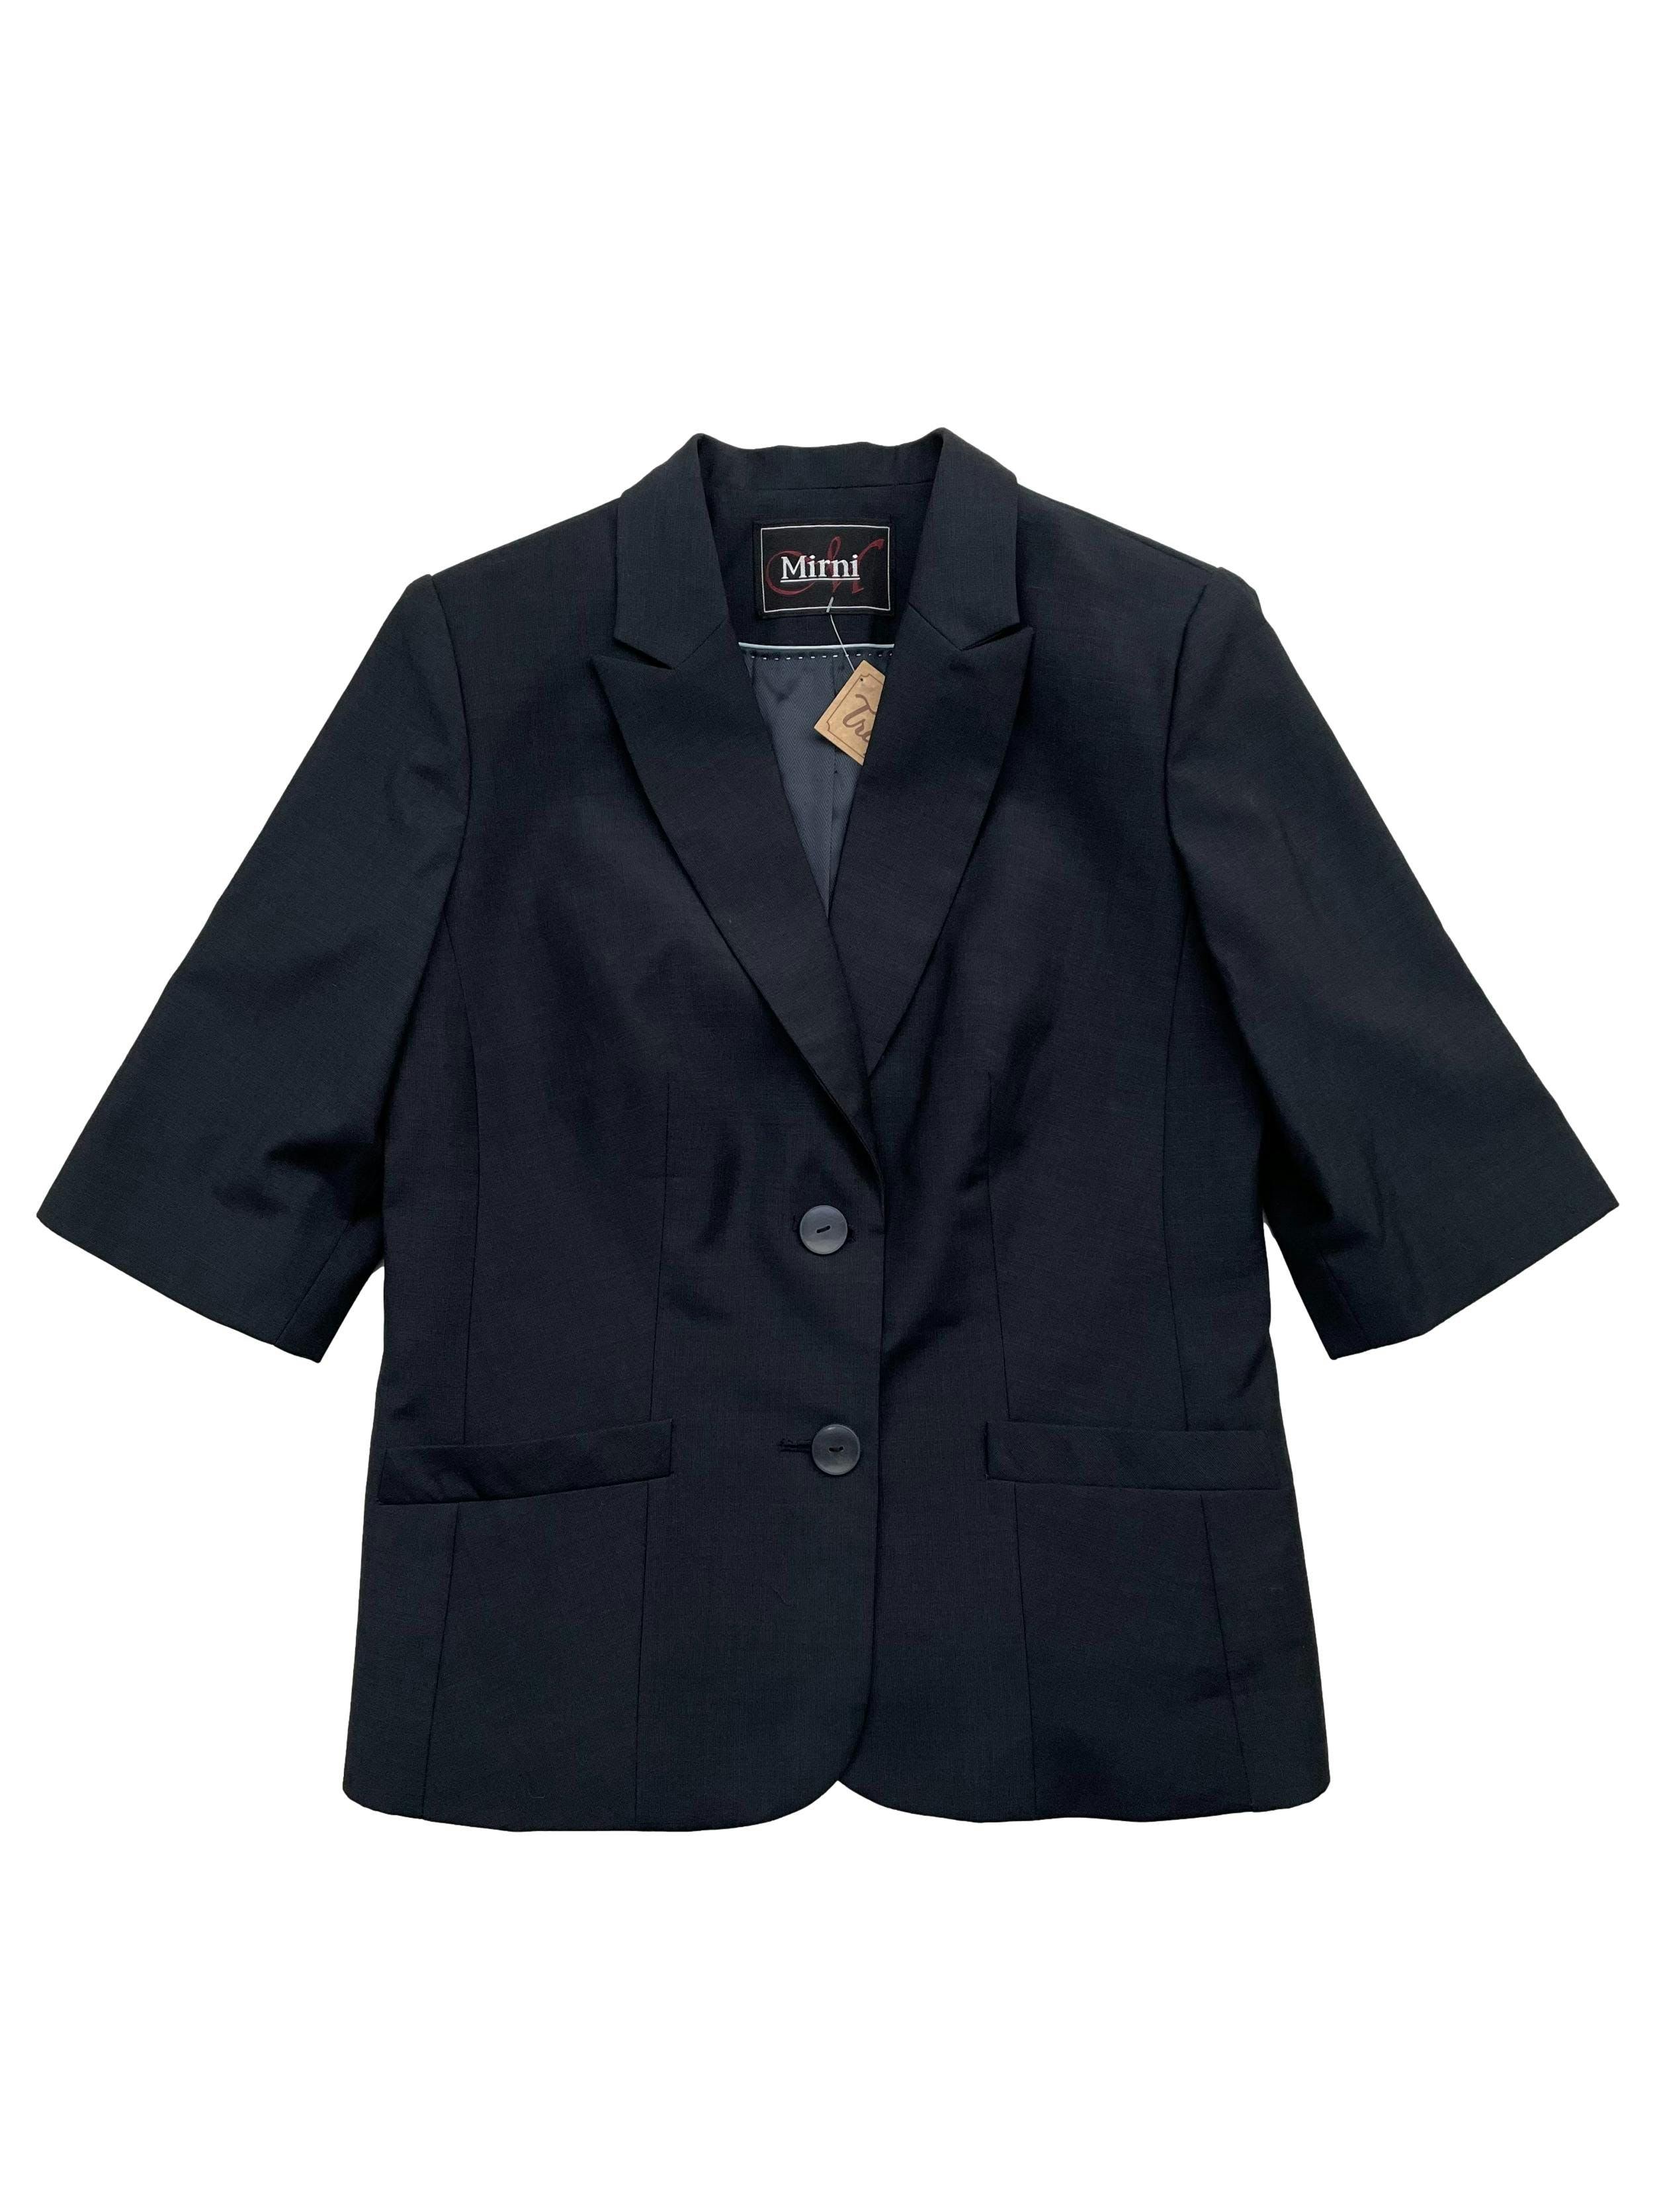 Blazer tela Barrington azul marino 55% lana, forrado, mangas 3/4, hombreras ligeras, 2 bolsillos externos y 1 bolsillo interno. Busto 92cm, Largo 56cm.